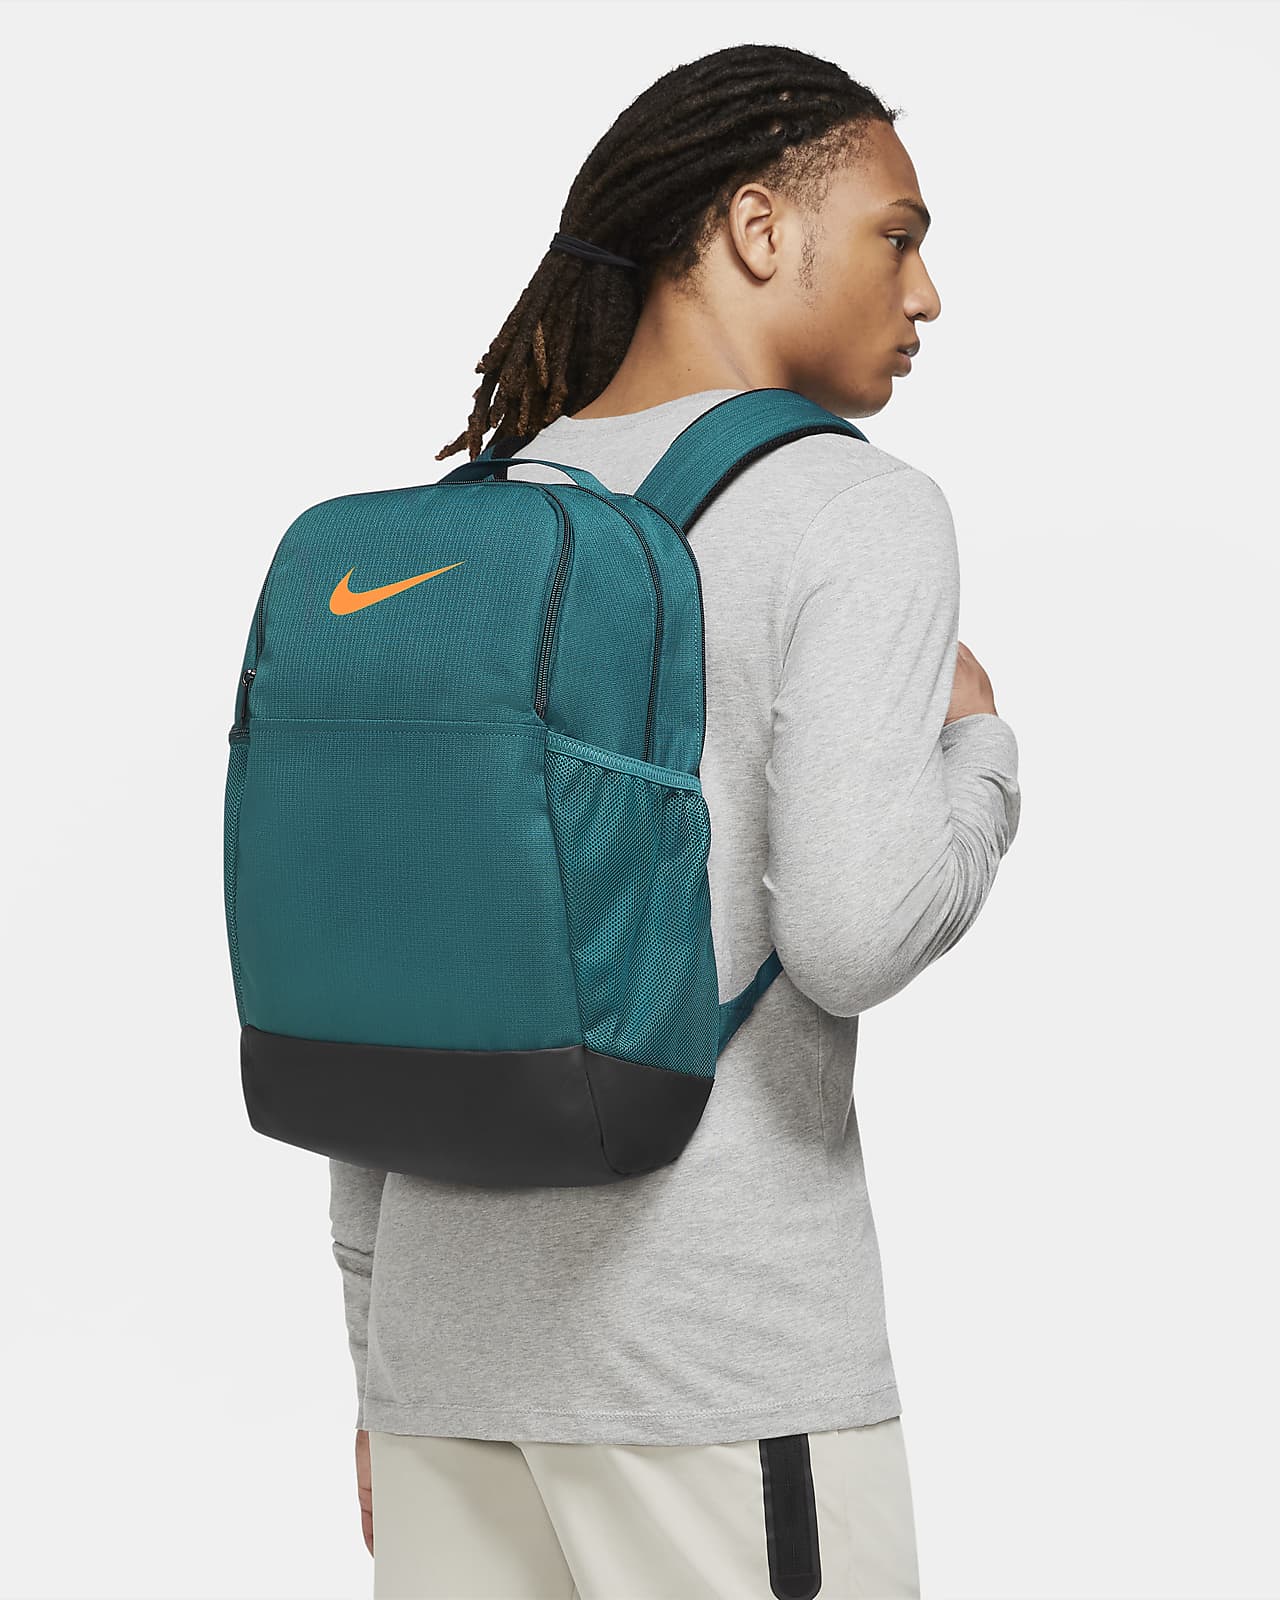 Nike Brasilia Medium 9.5 Backpack - DH7709  